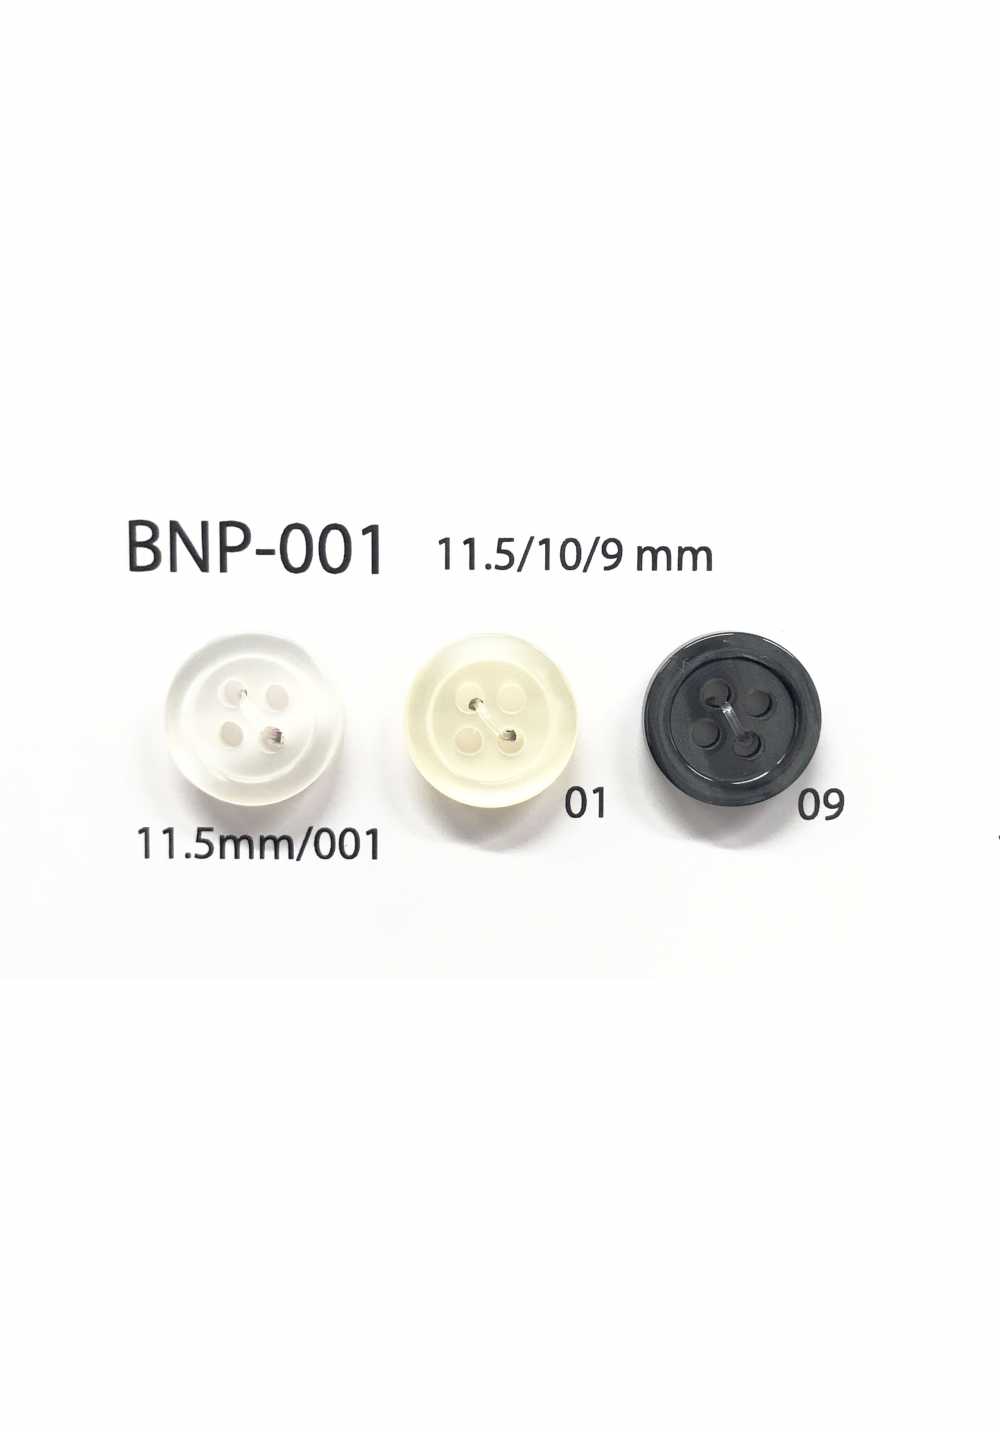 BNP-001 Cúc 4 Lỗ Biopolyester IRIS